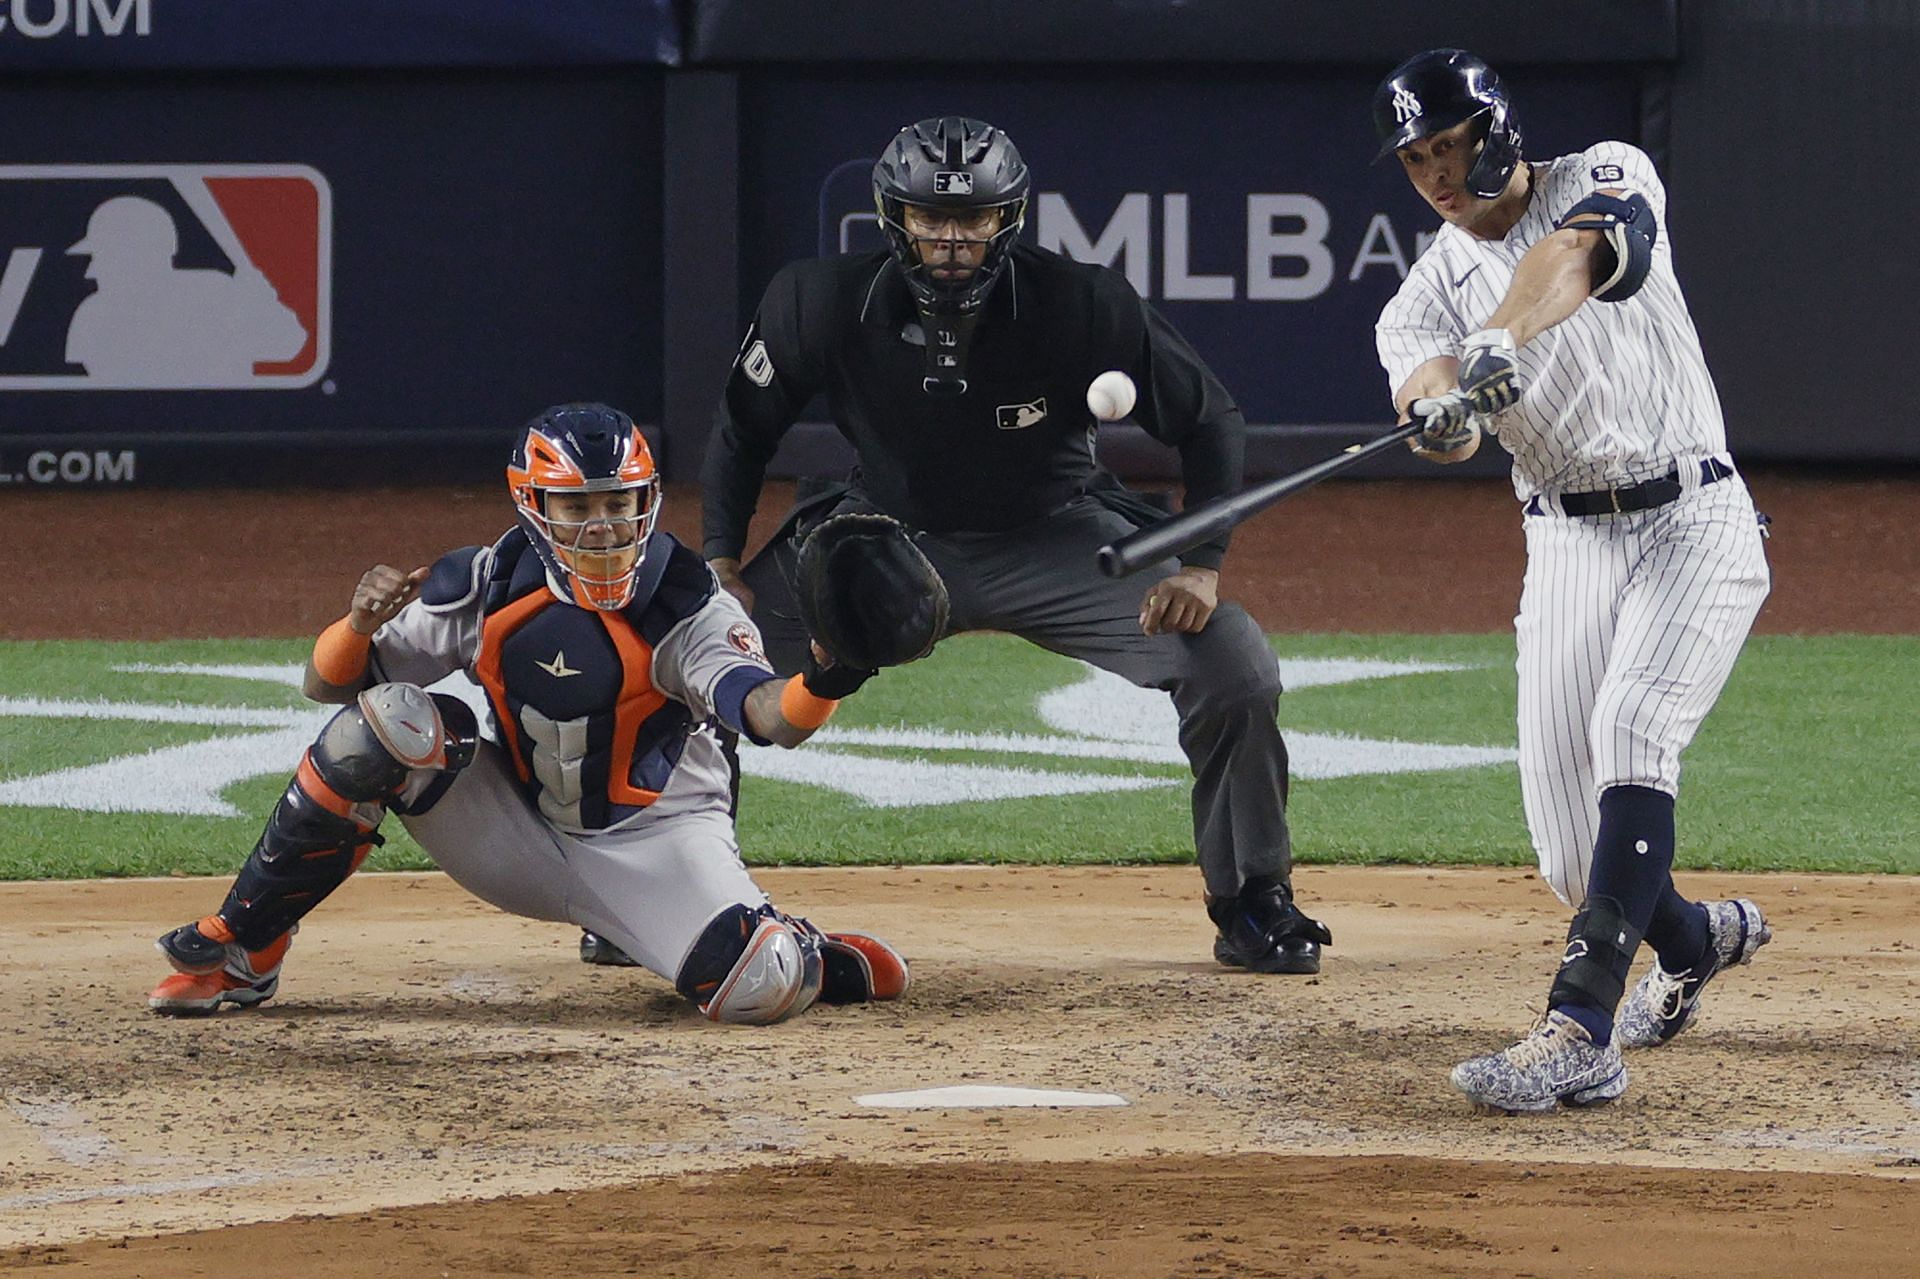 Giancarlo Stanton crushes a hit during a Houston Astros v New York Yankees game last season.